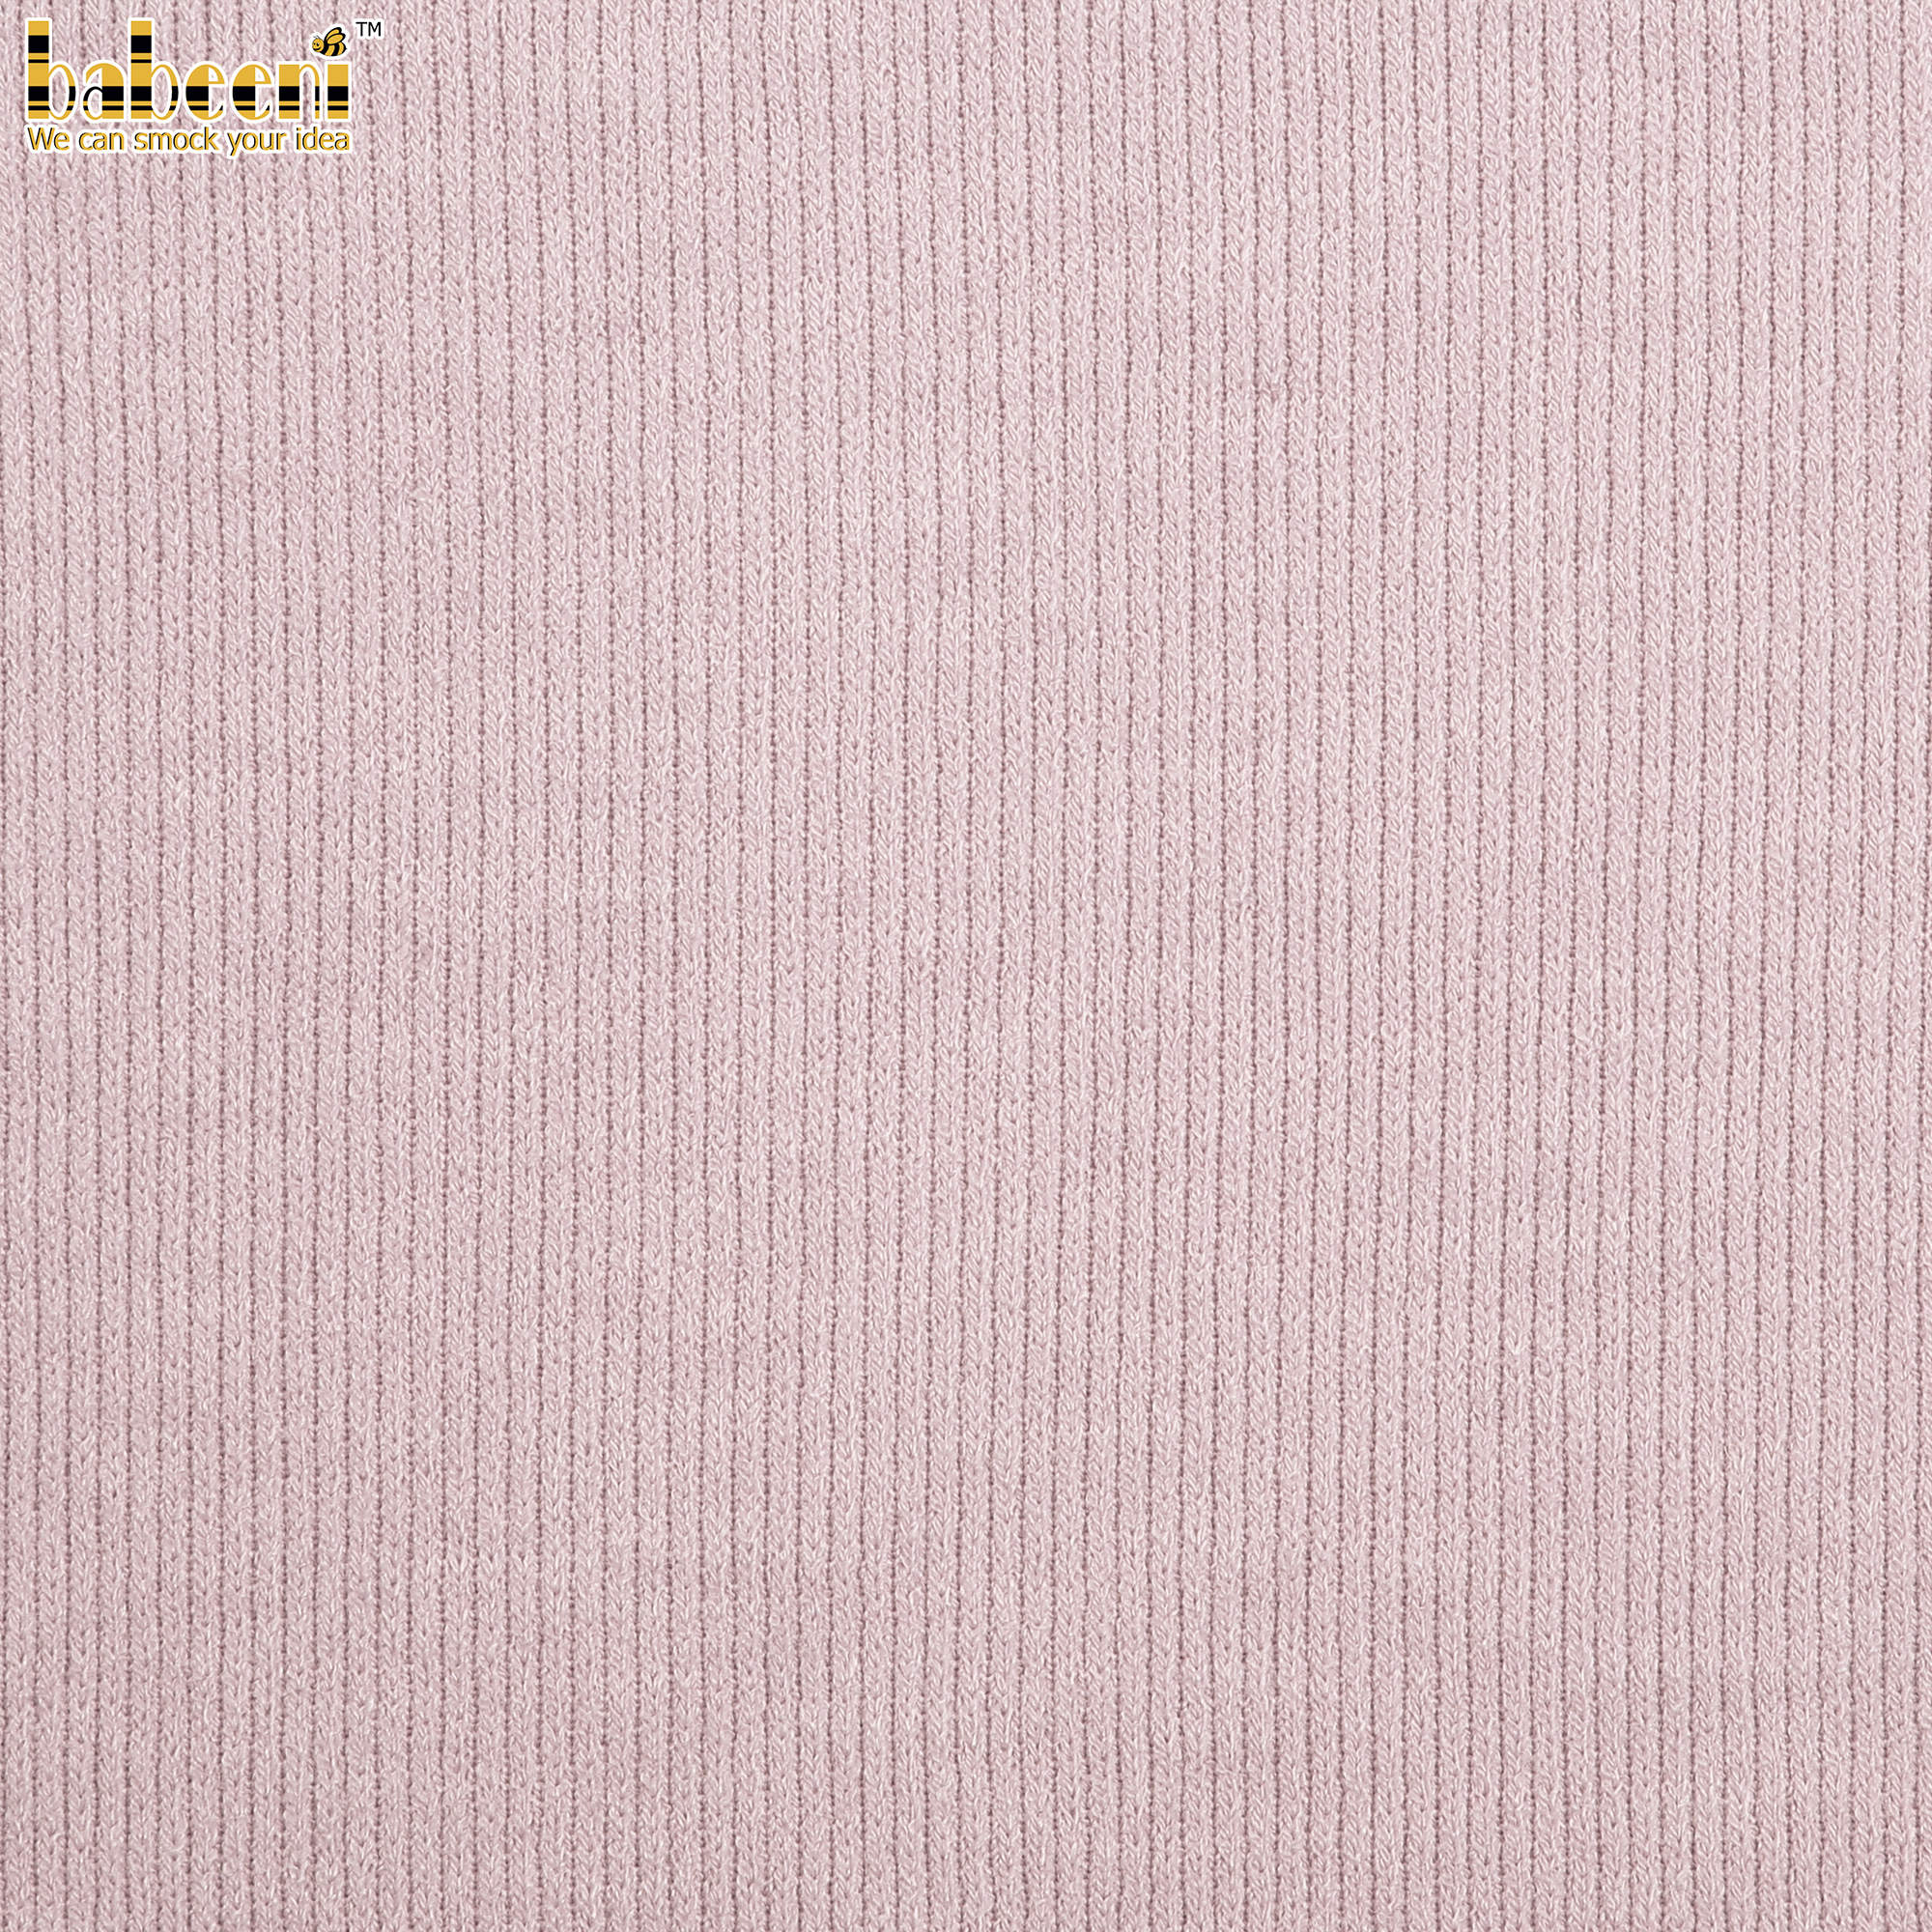 CD15- pink plain thick cardigan fabric